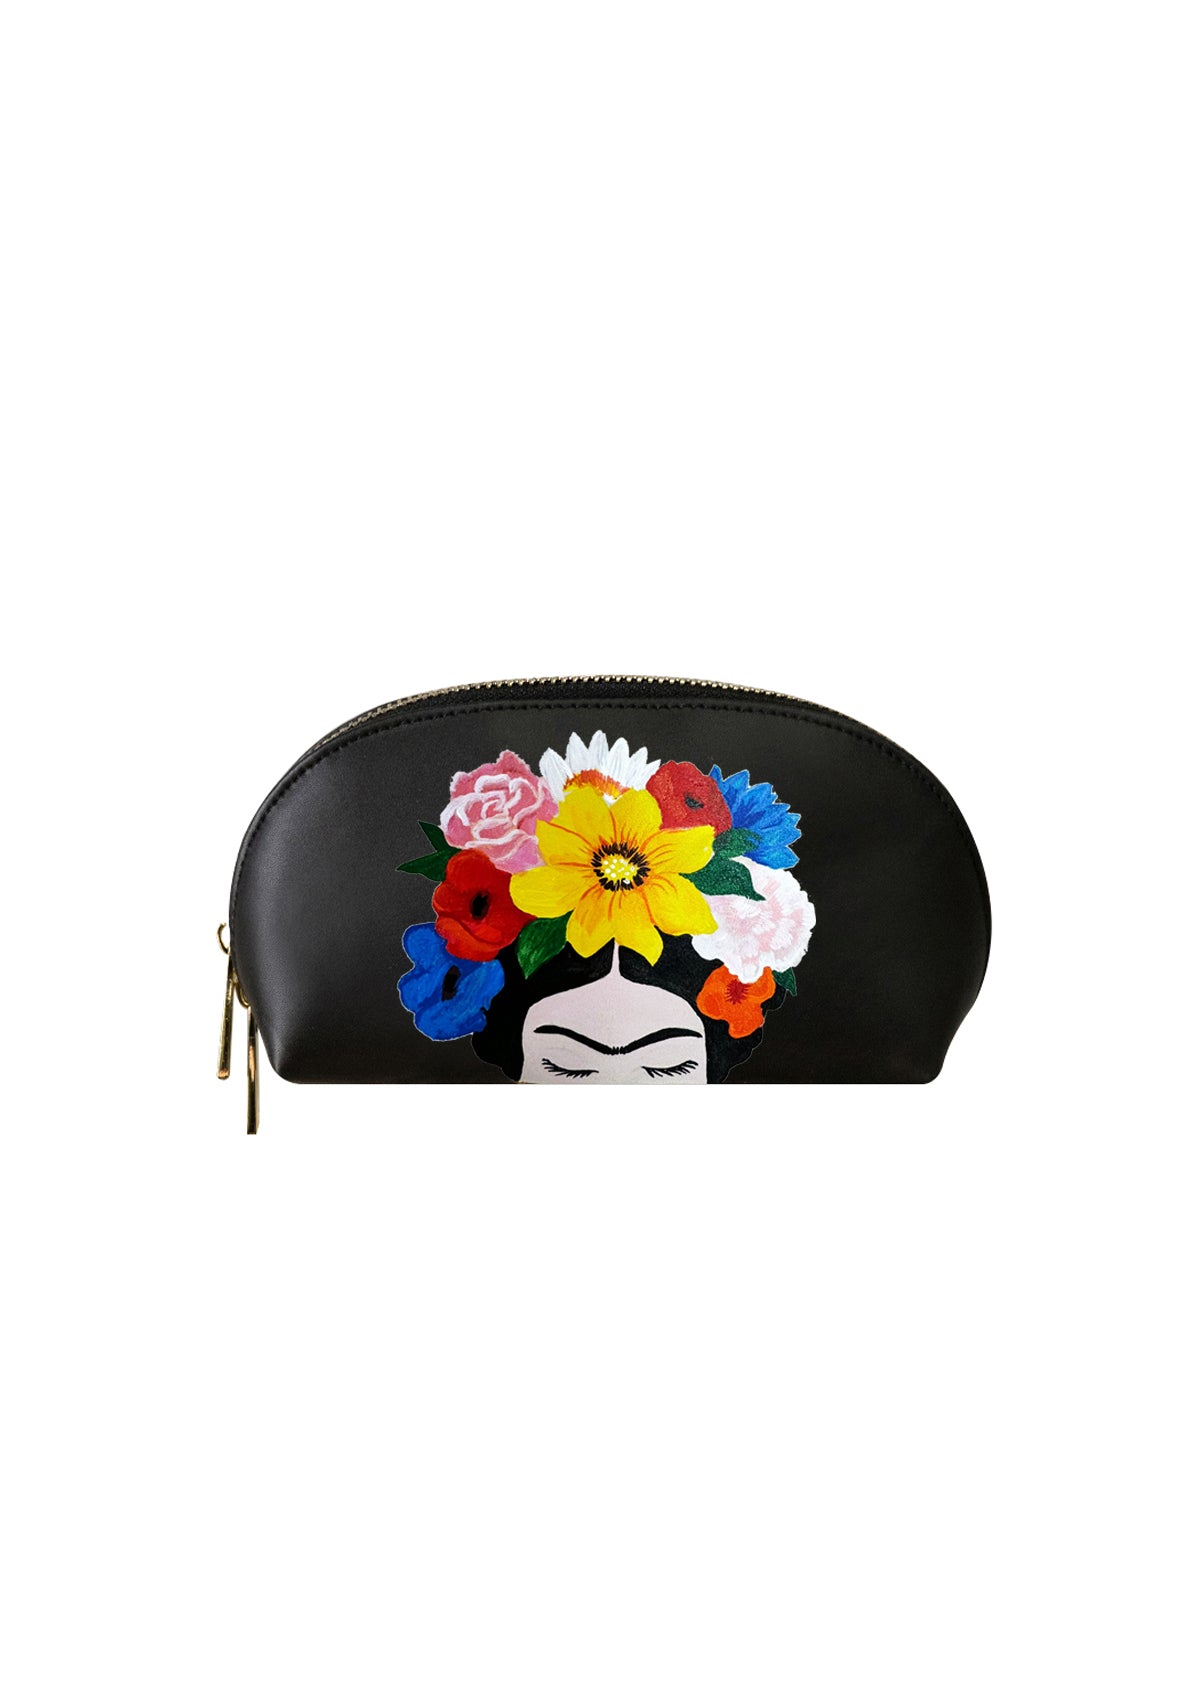 Her Floral Crown Makeup Bag